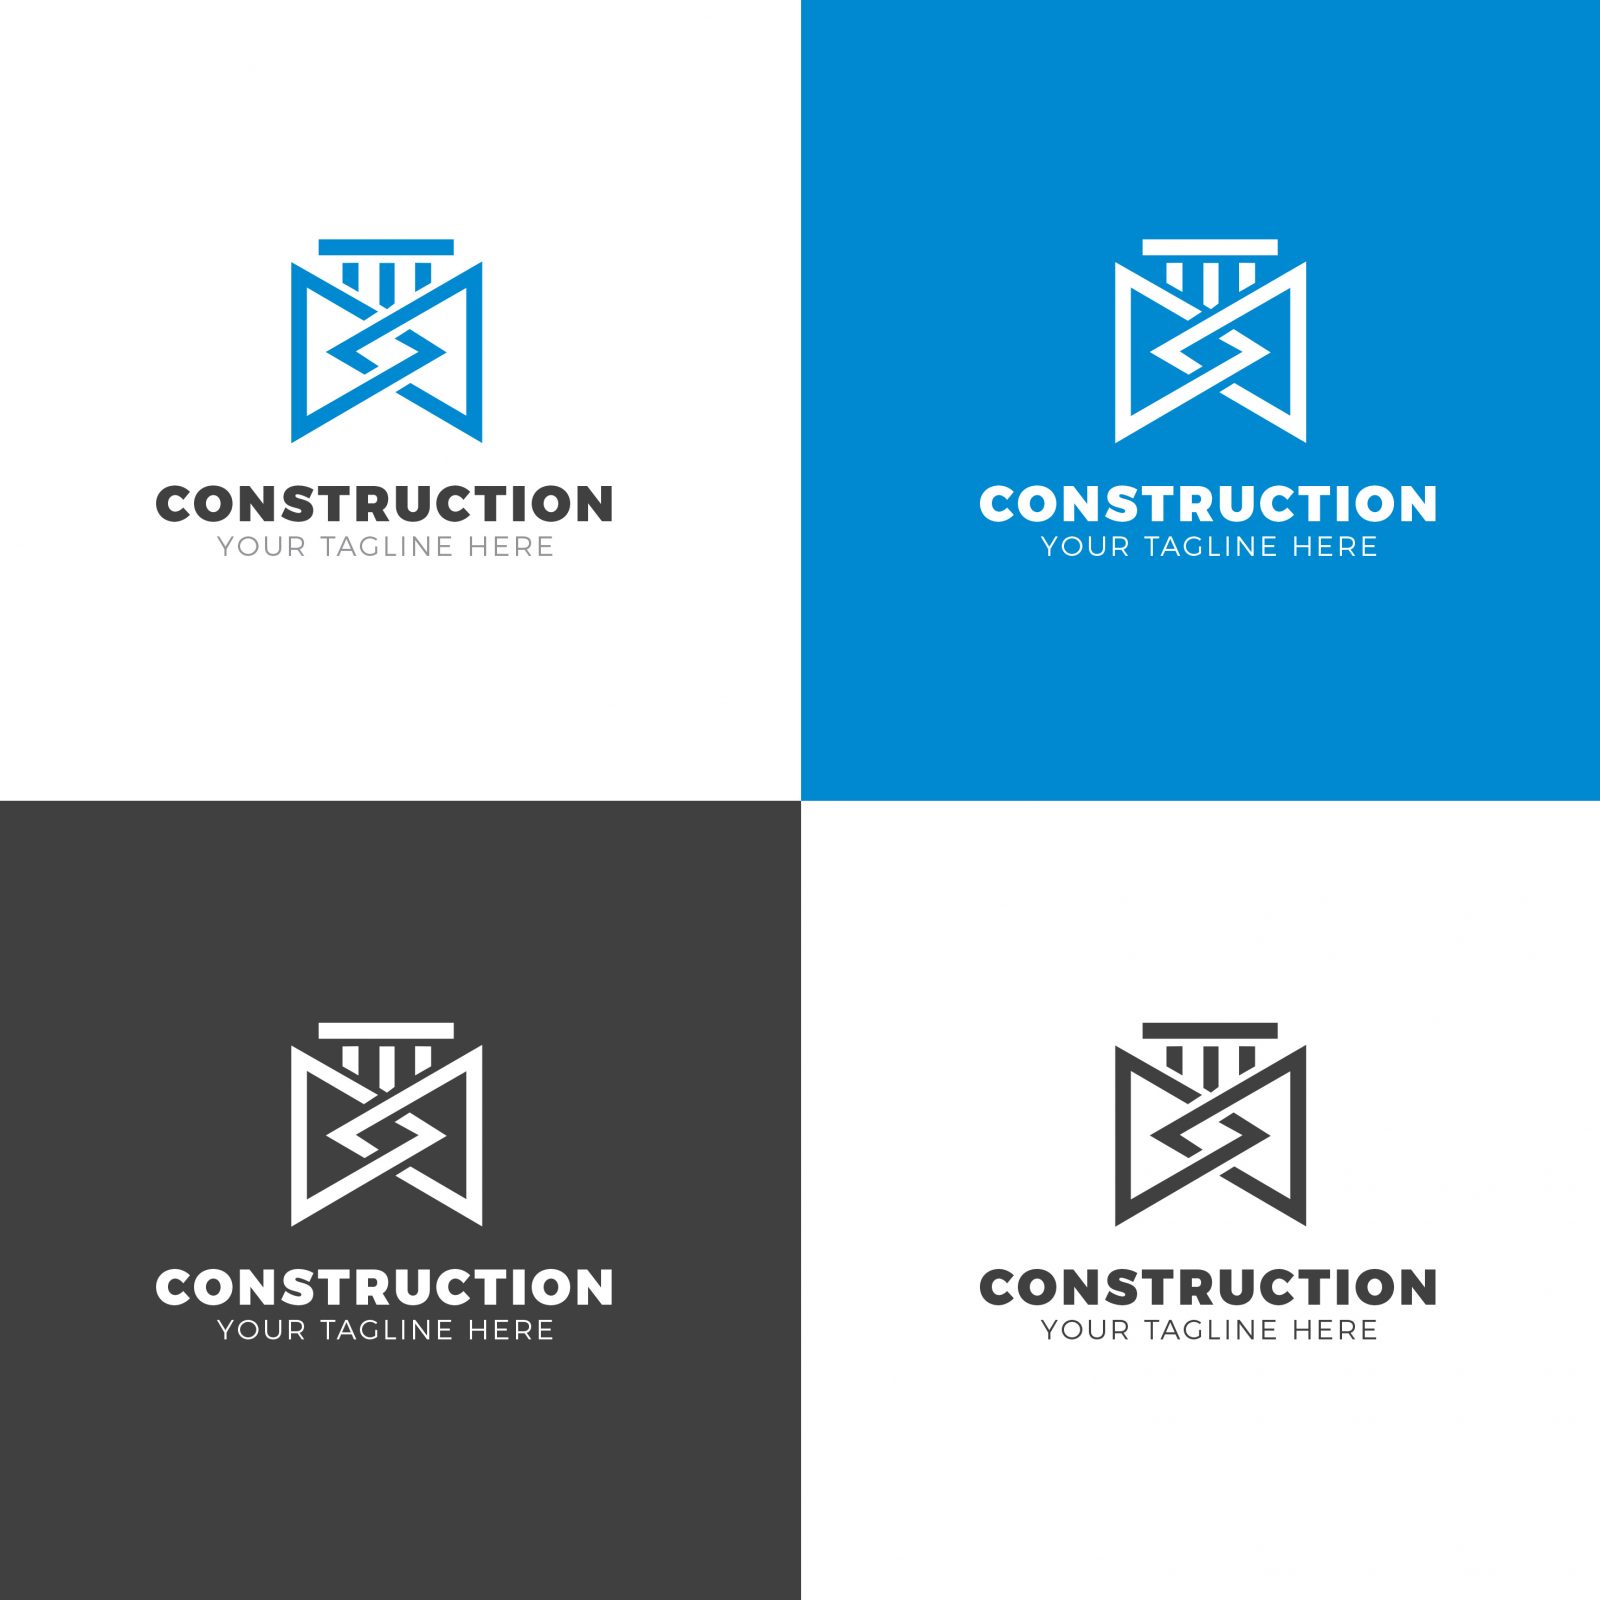 Construction Company Creative Logo Design Template 001839 - Template